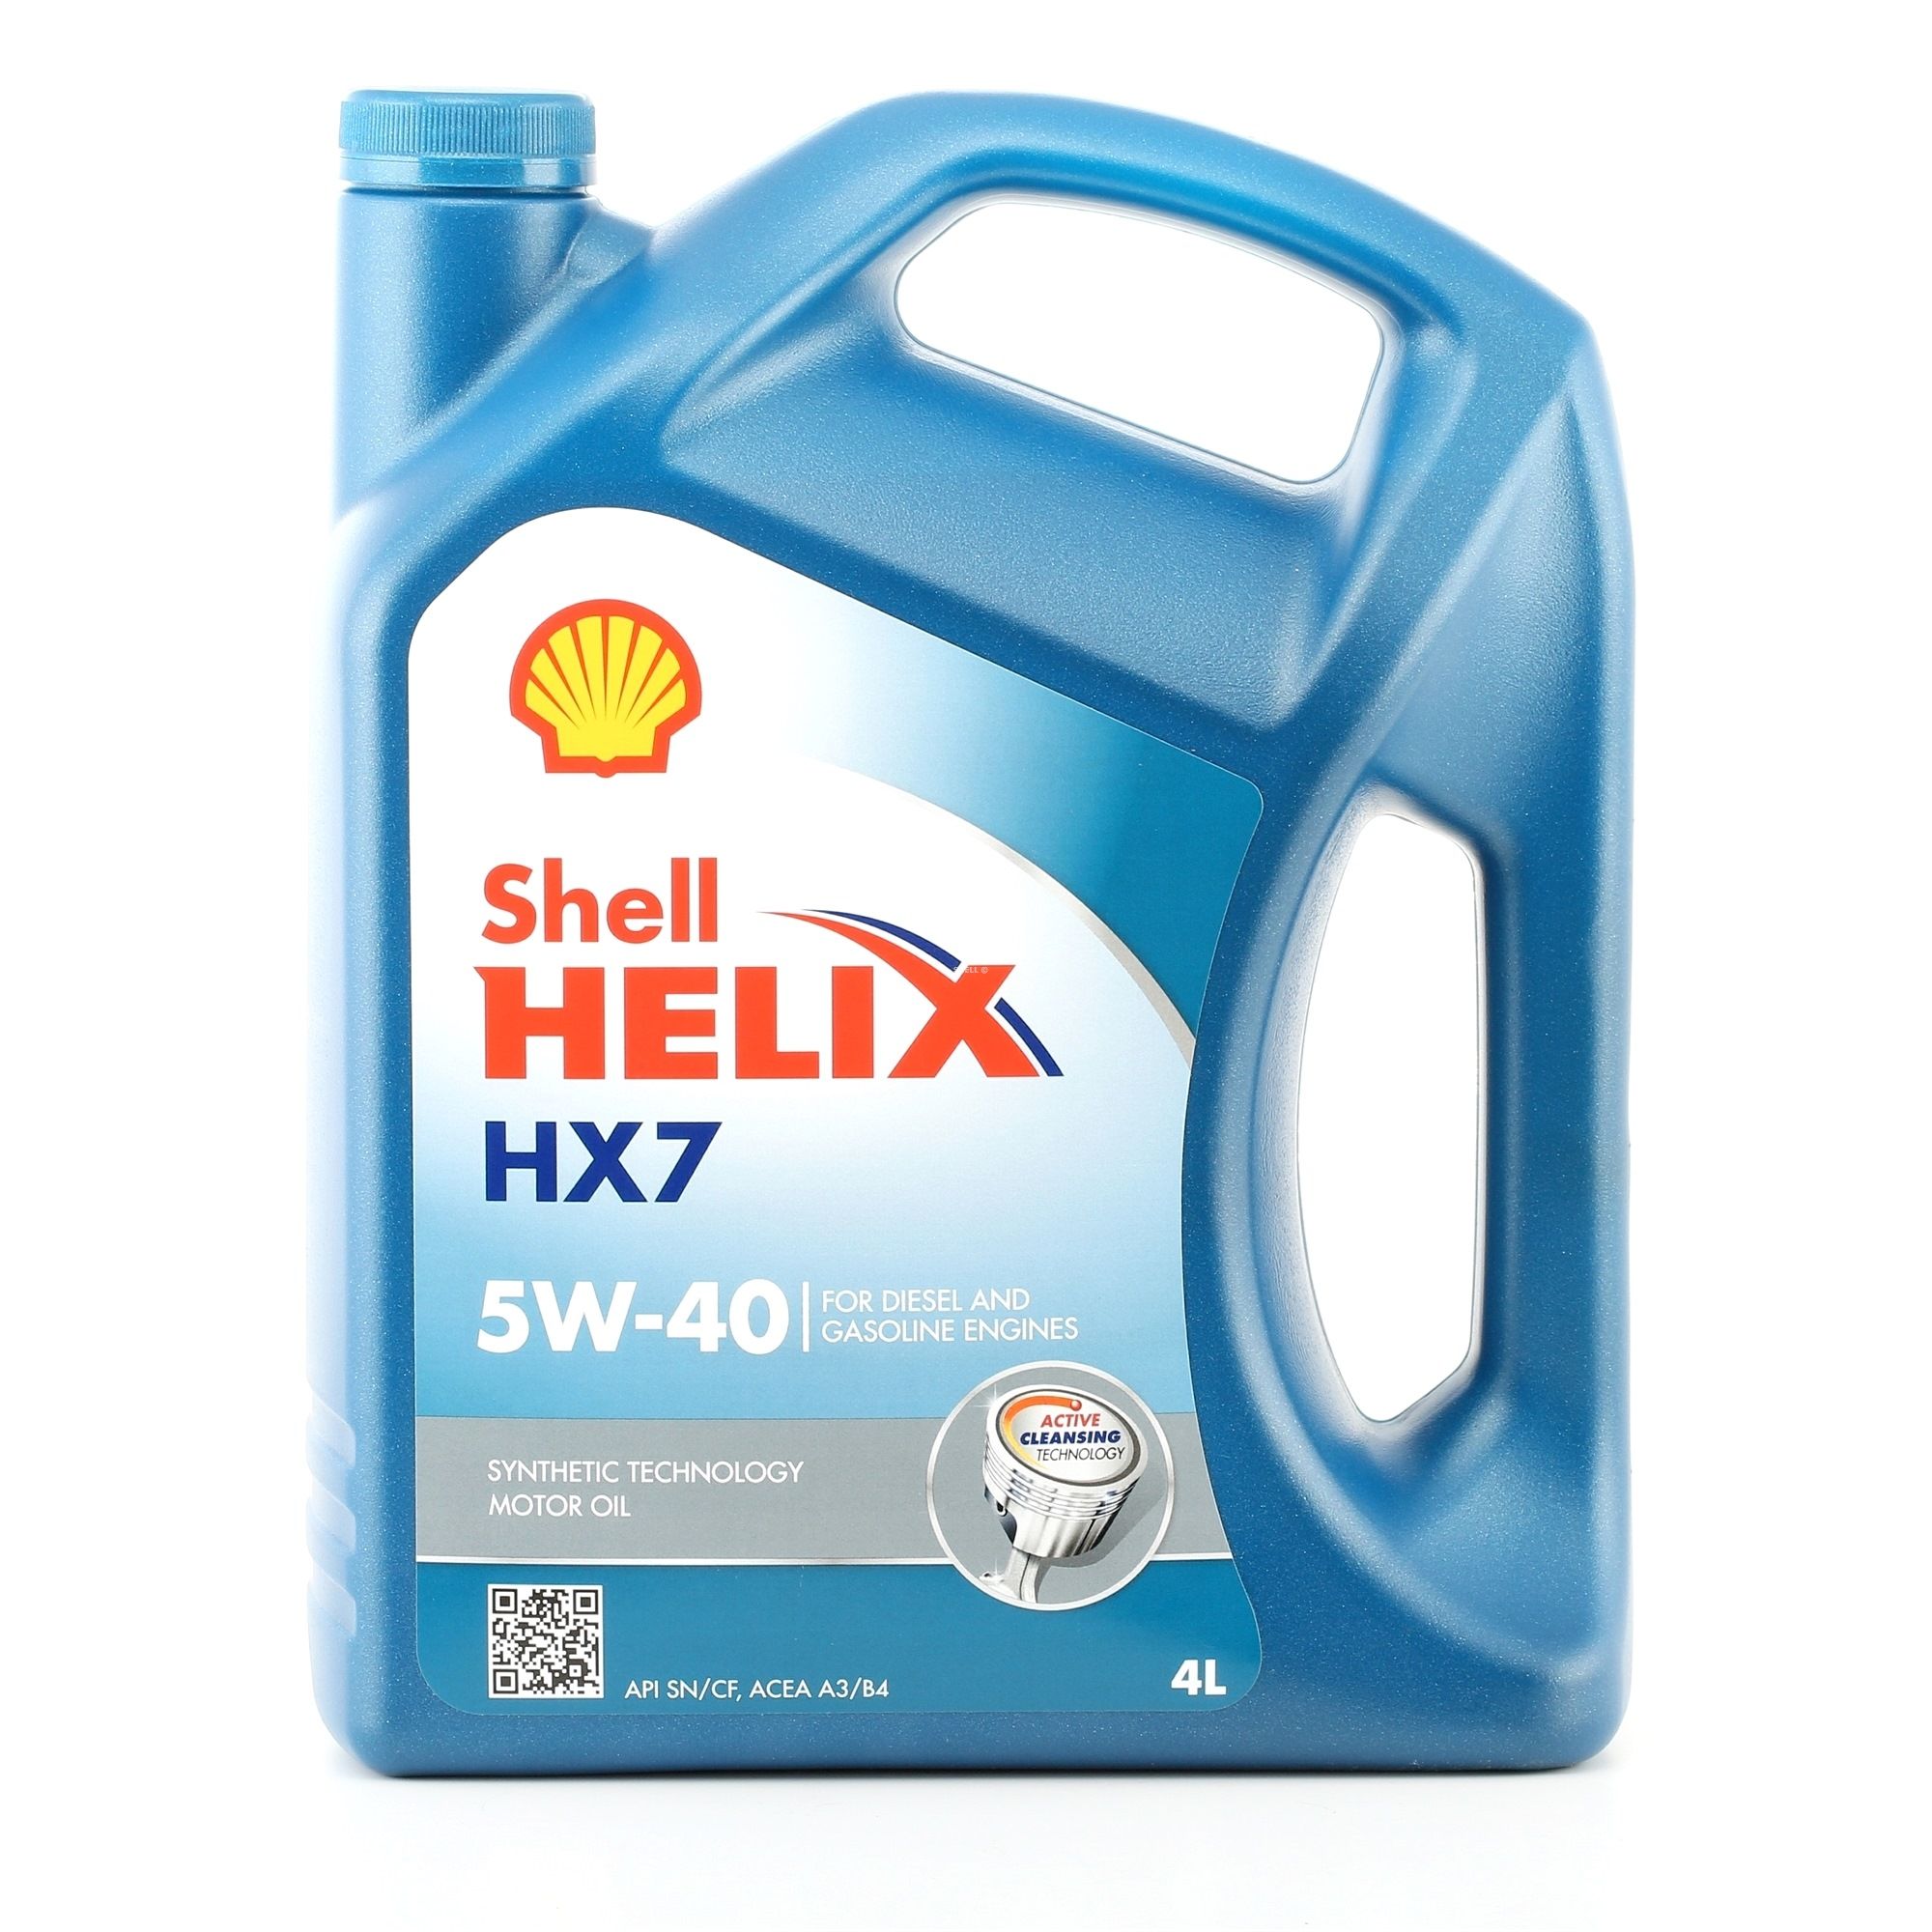 Buy Automobile oil SHELL petrol 550046284 Helix, HX7 5W-40, 4l